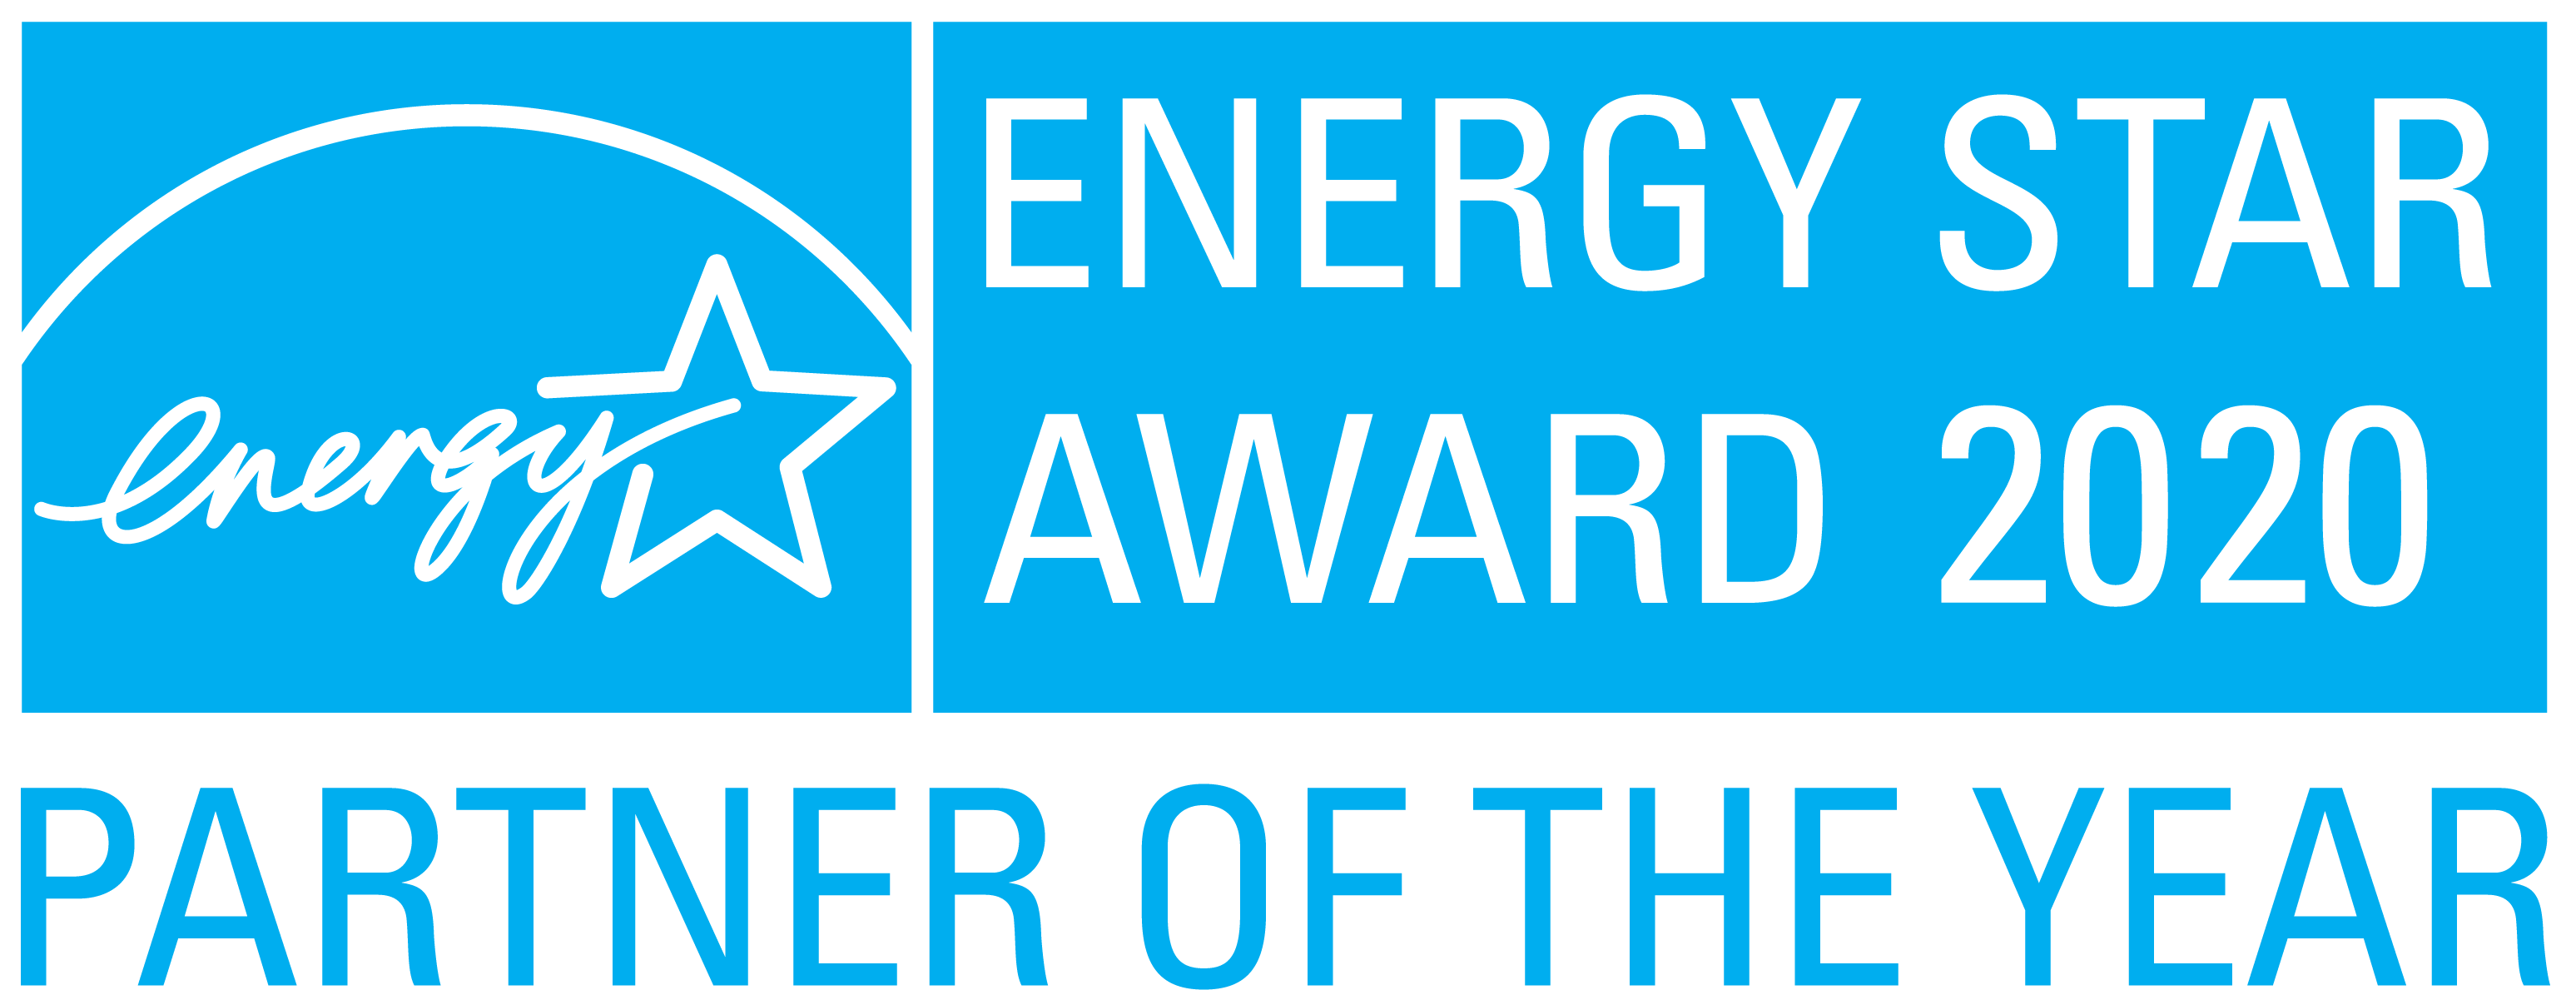 Energy Star award 2020. Partner of the year.